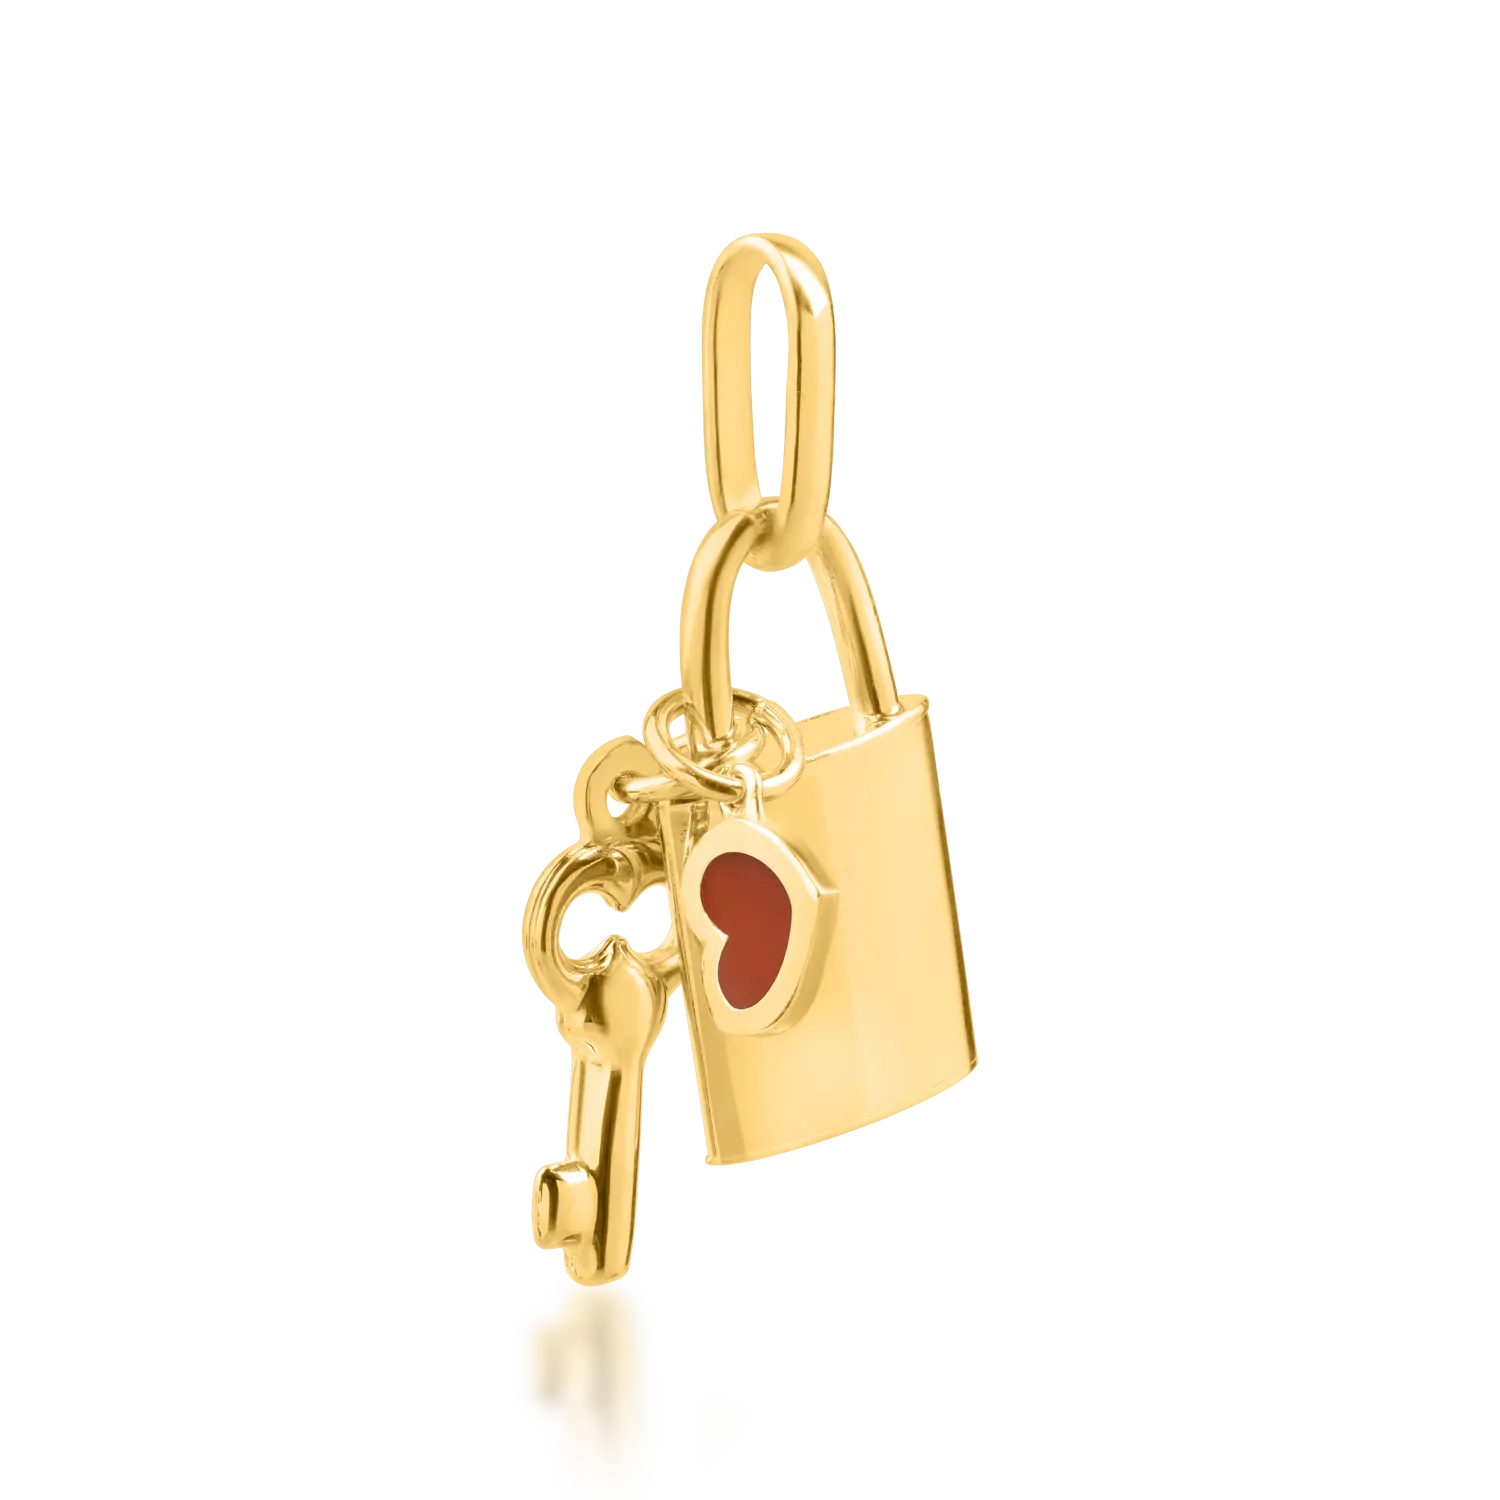 Yellow gold locker and key pendant